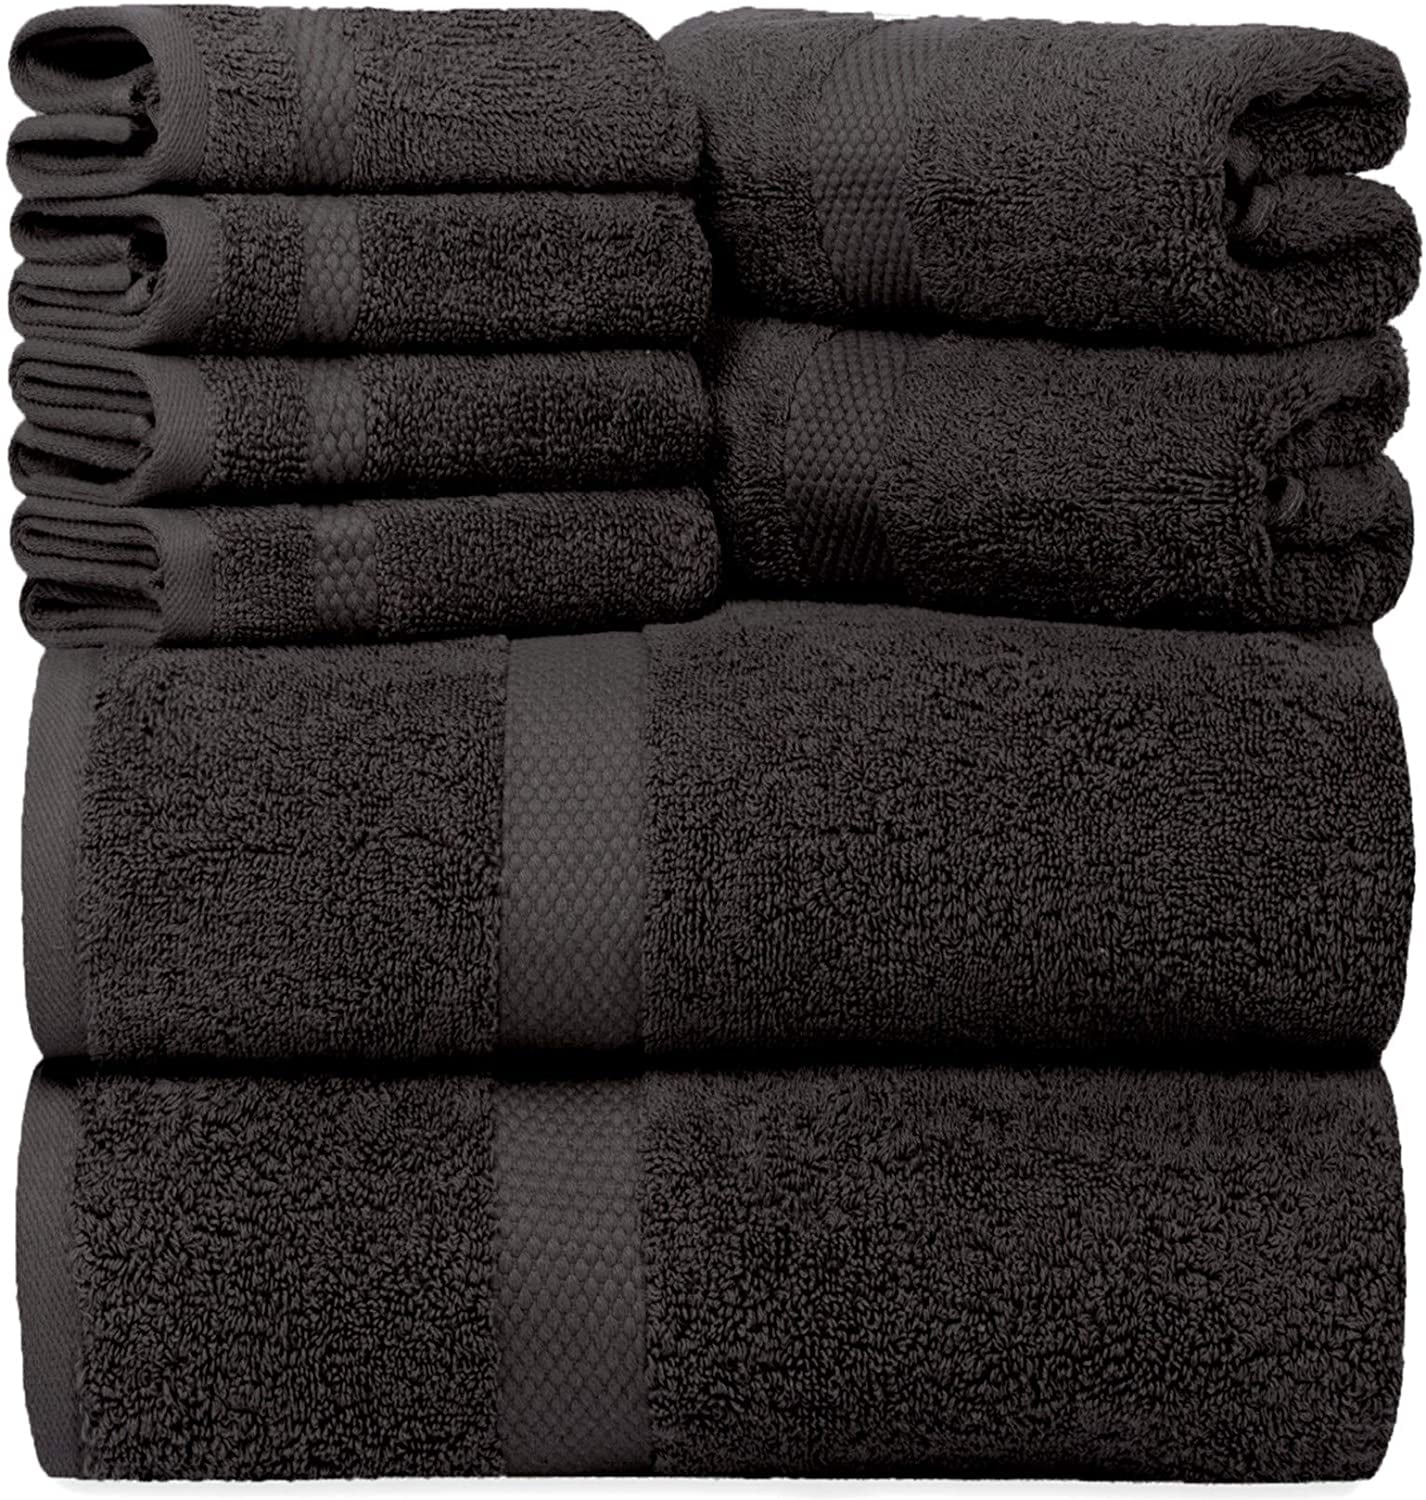 The Emily & Meritt Black and White College Towel Set